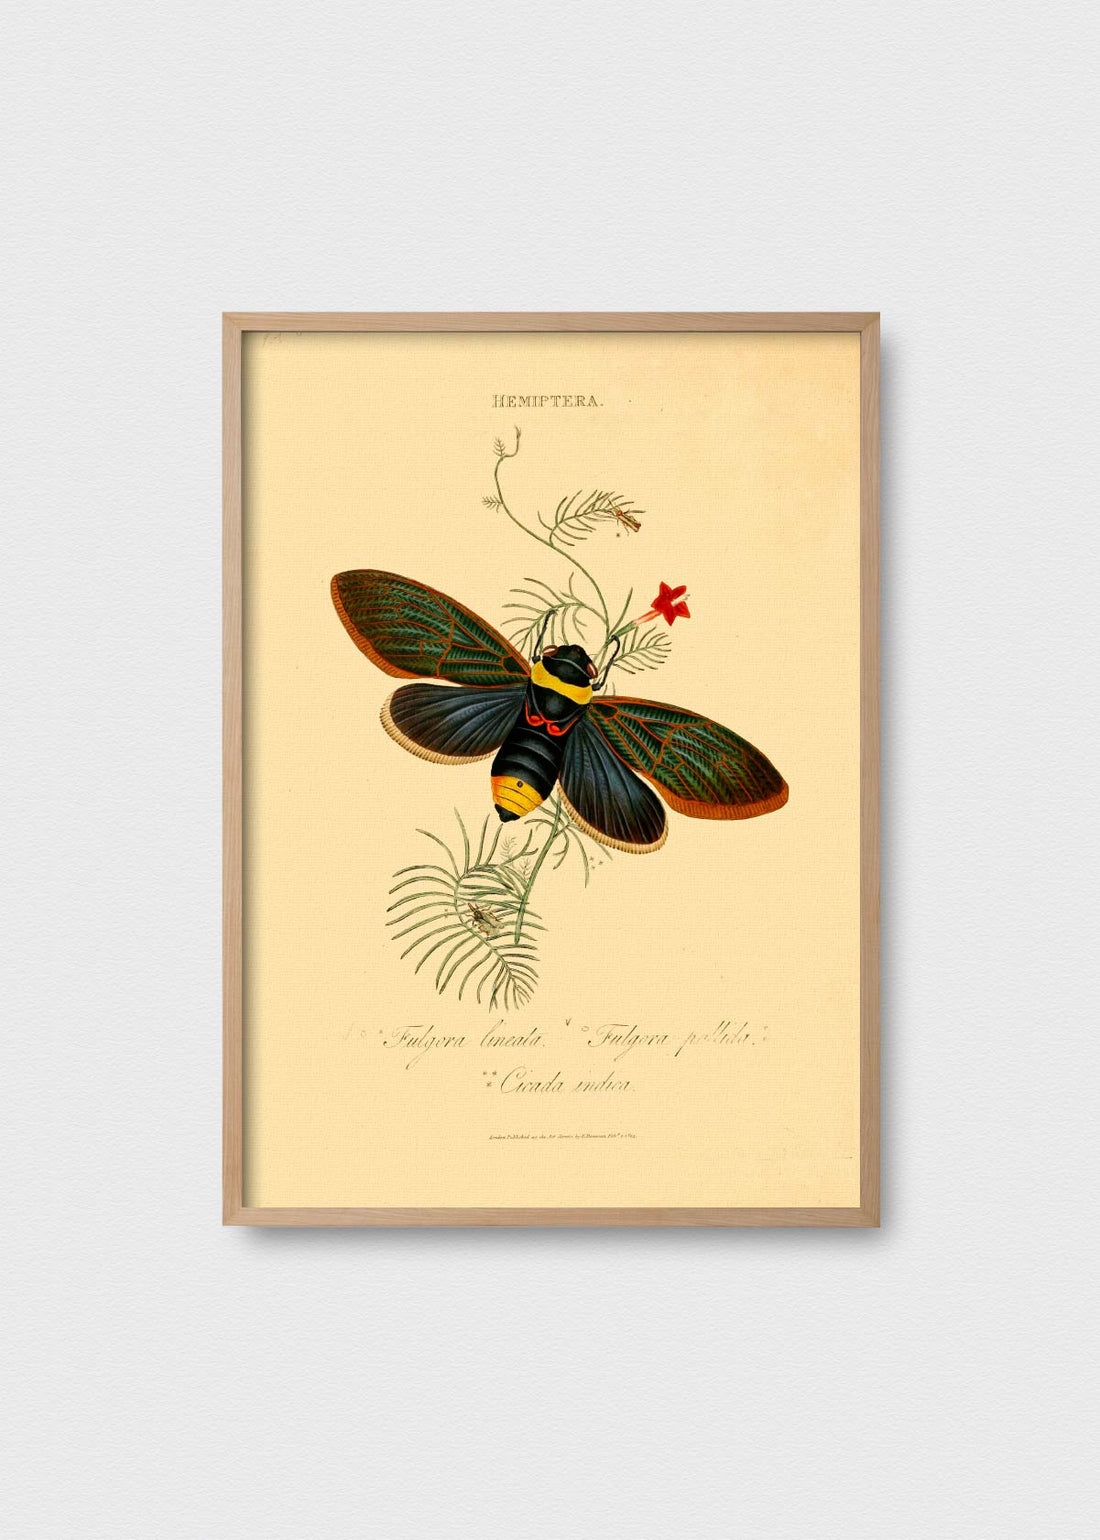 Cicada Indica - Testimoniaprints